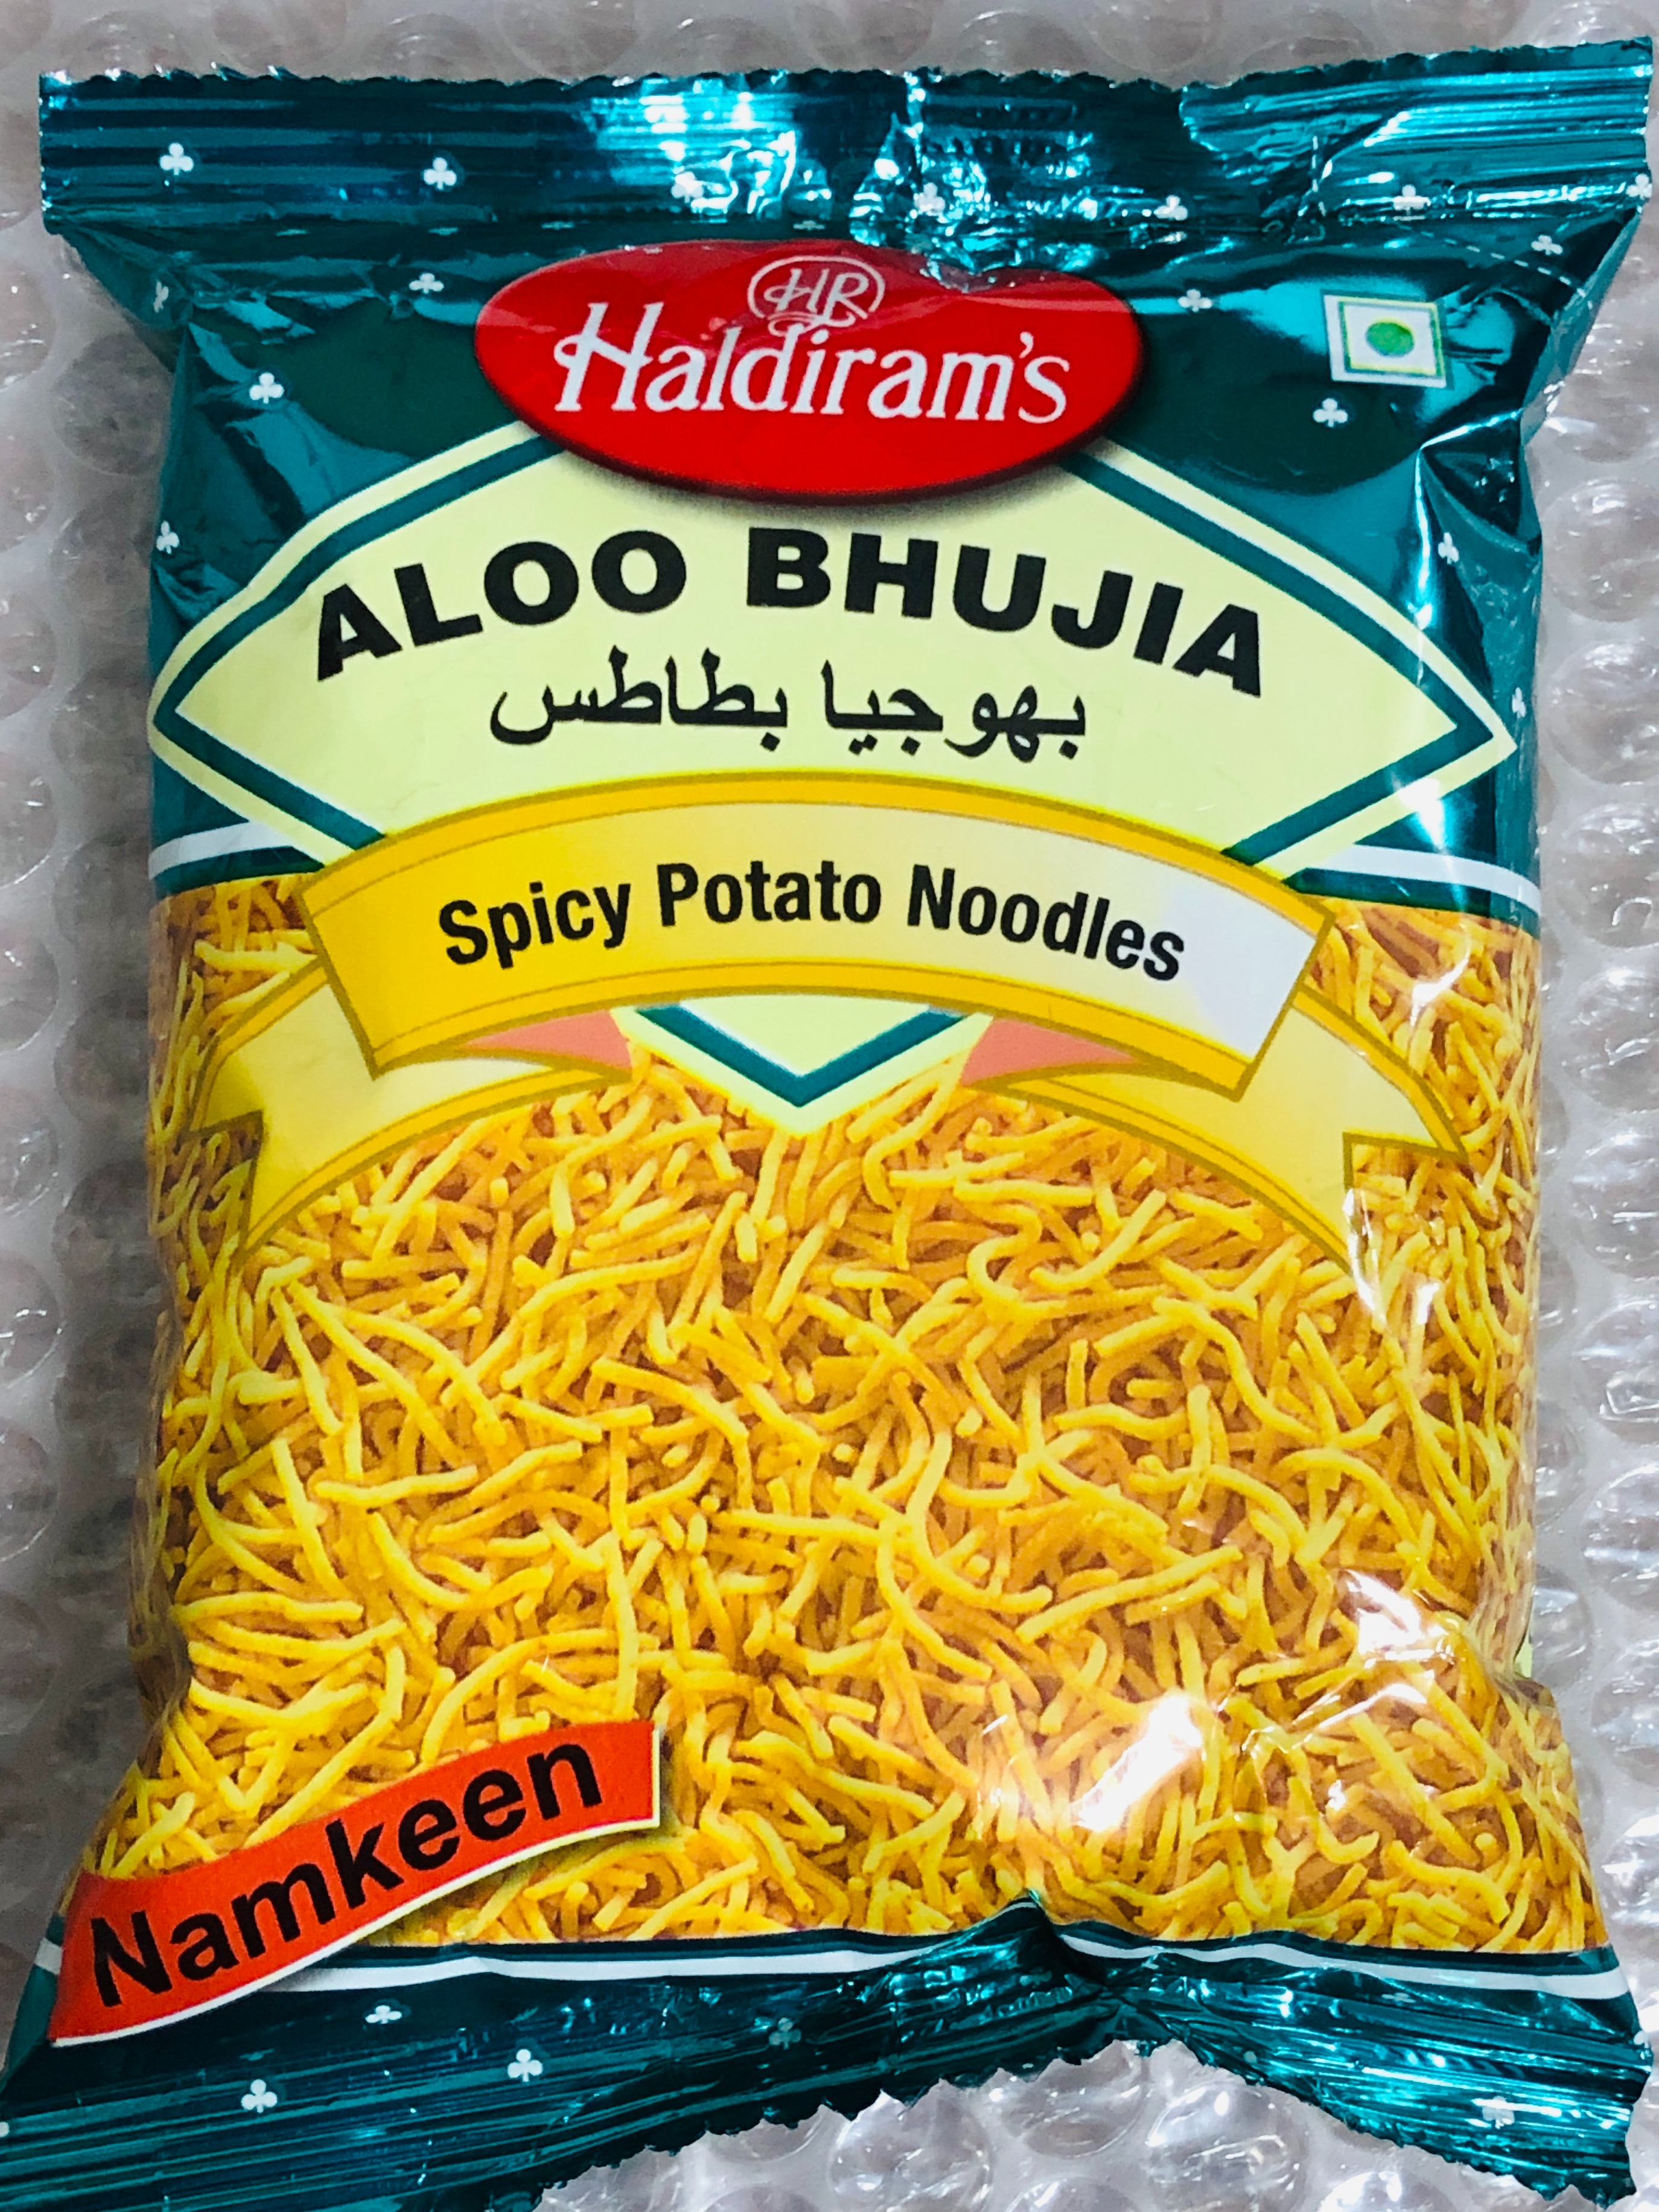 Haldiram's Aloo Bhujia 40g ขนมขบเคี้ยวอินเดีย 40กรัม.